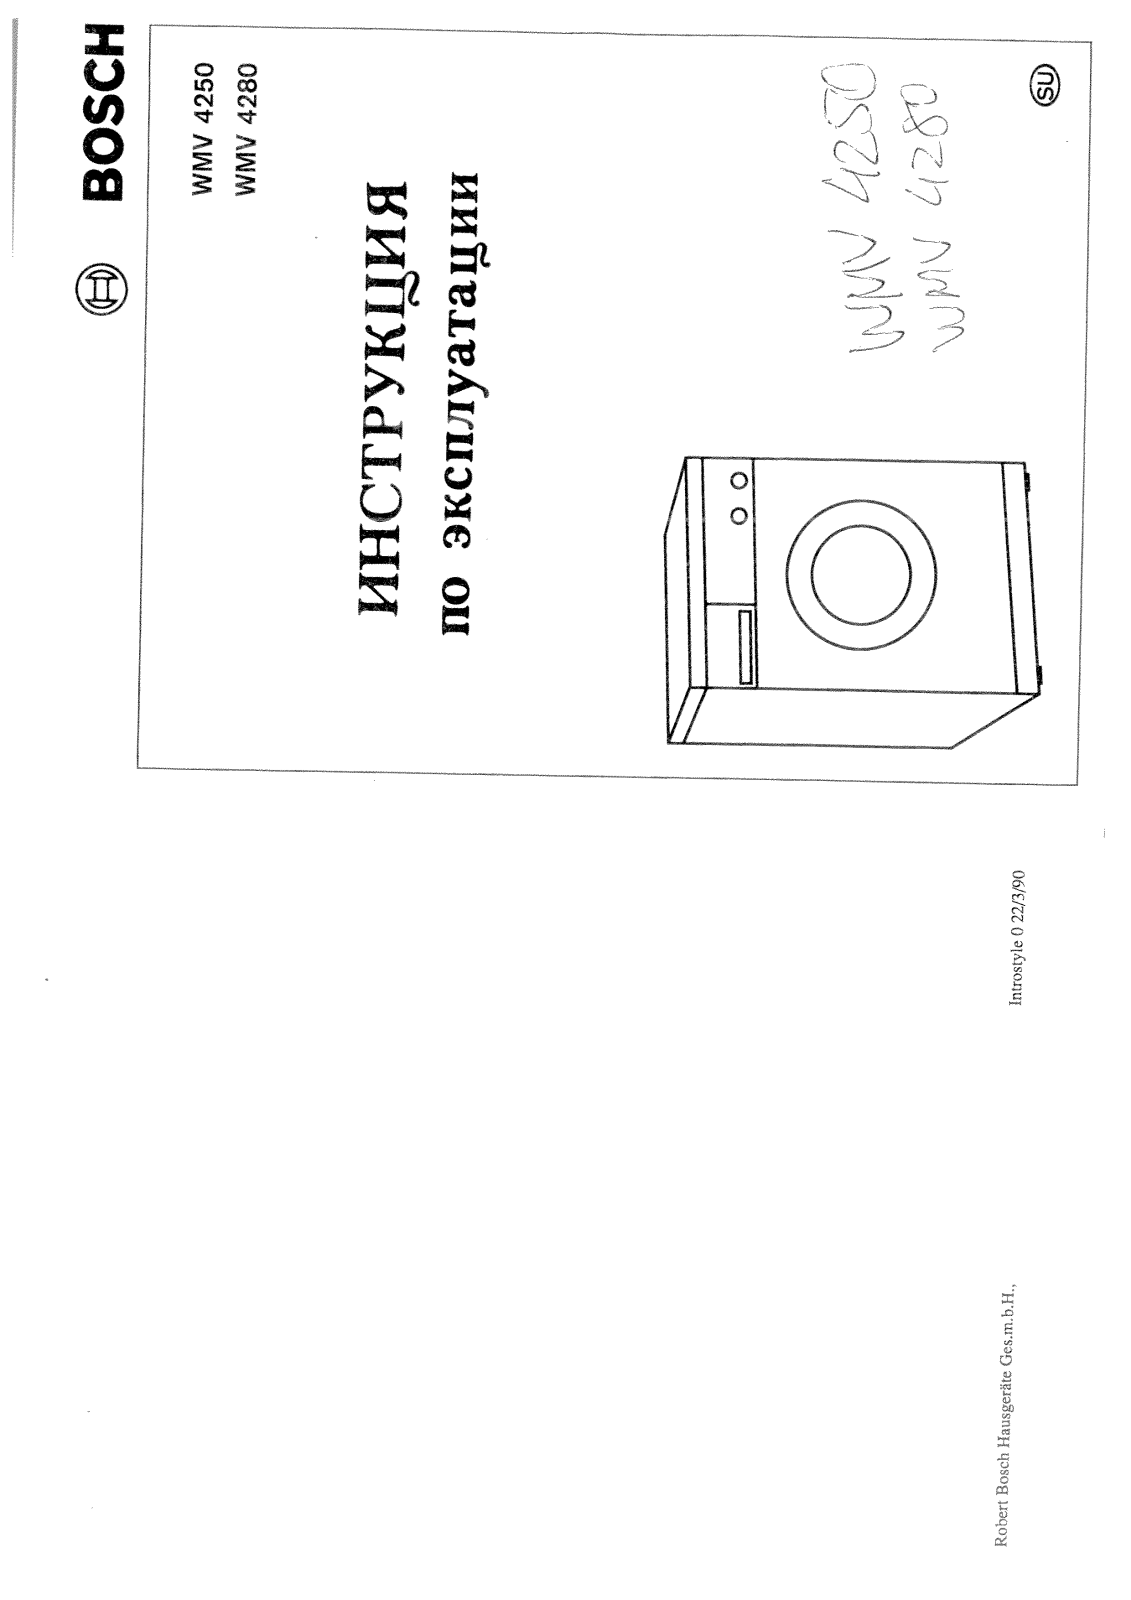 Bosch WMV 4280 User Manual